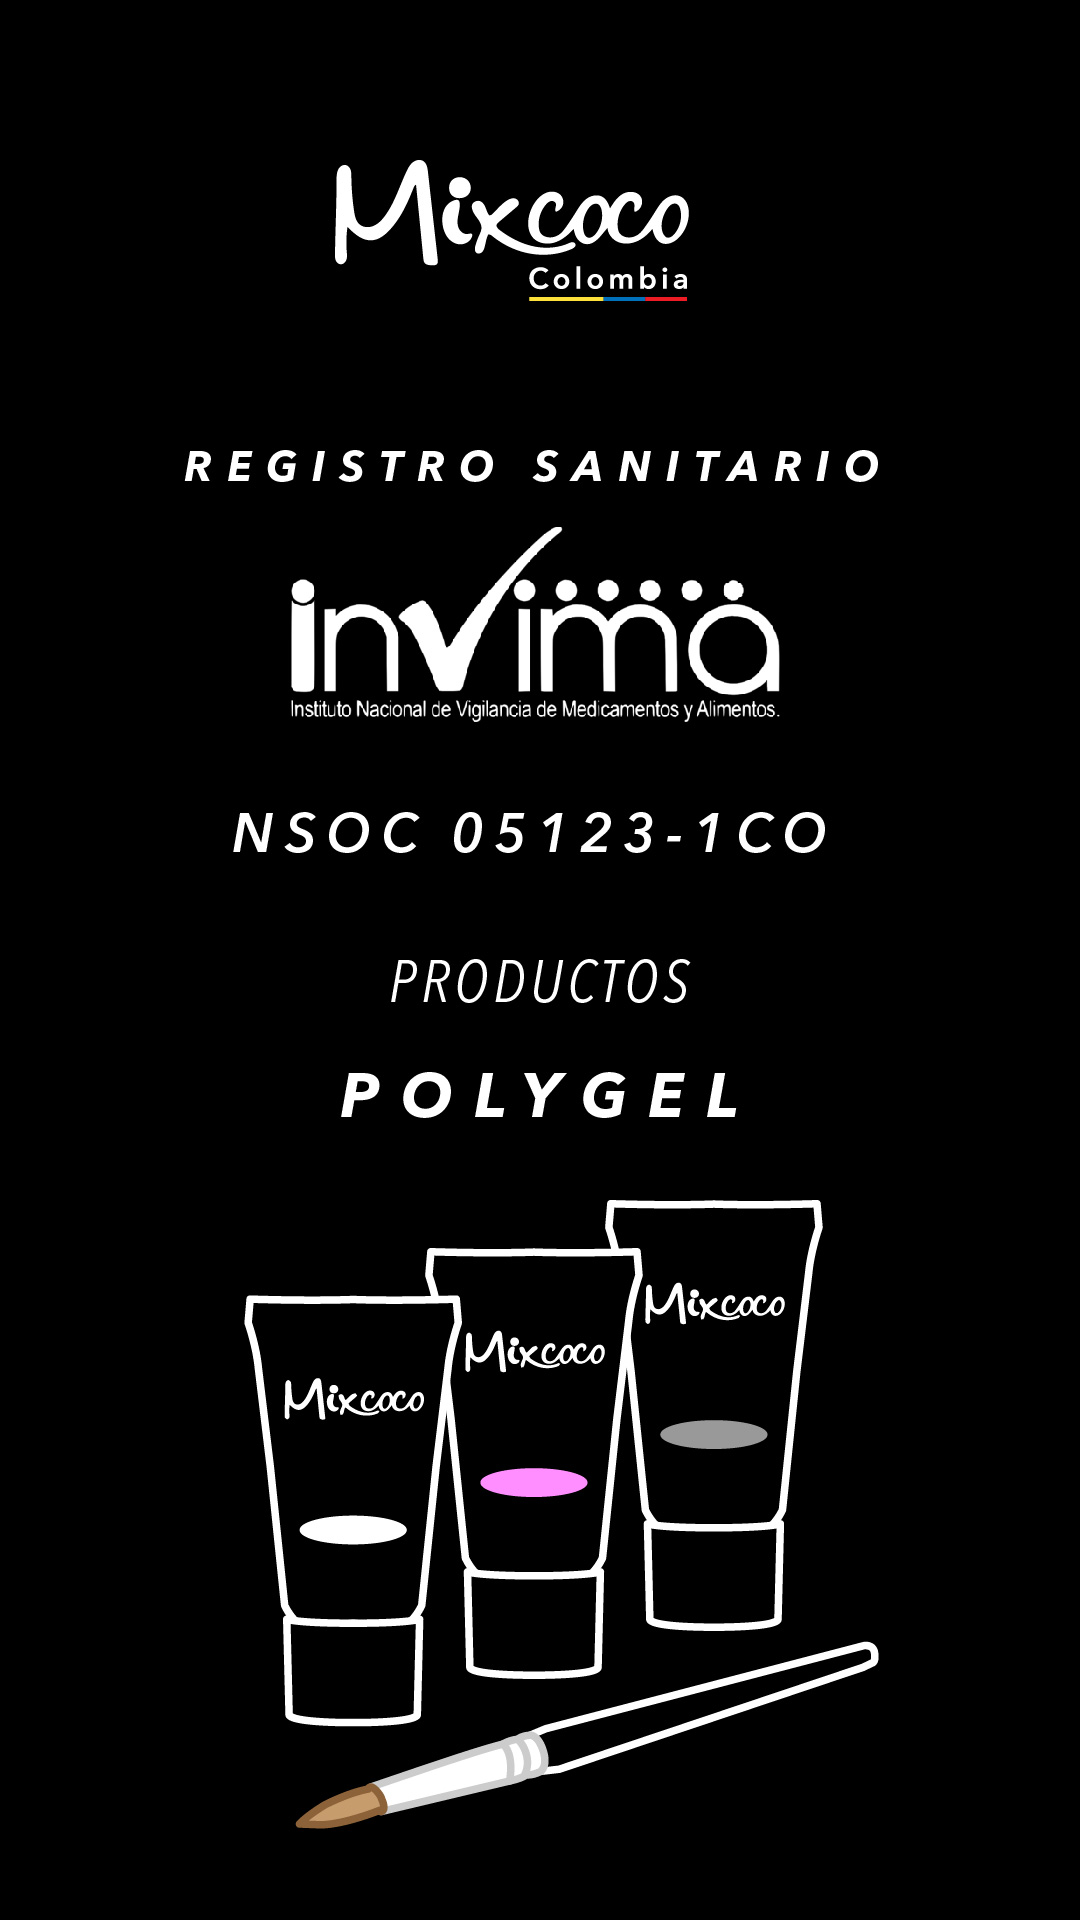 INVIMA_POLYGEL-MIXCOCO